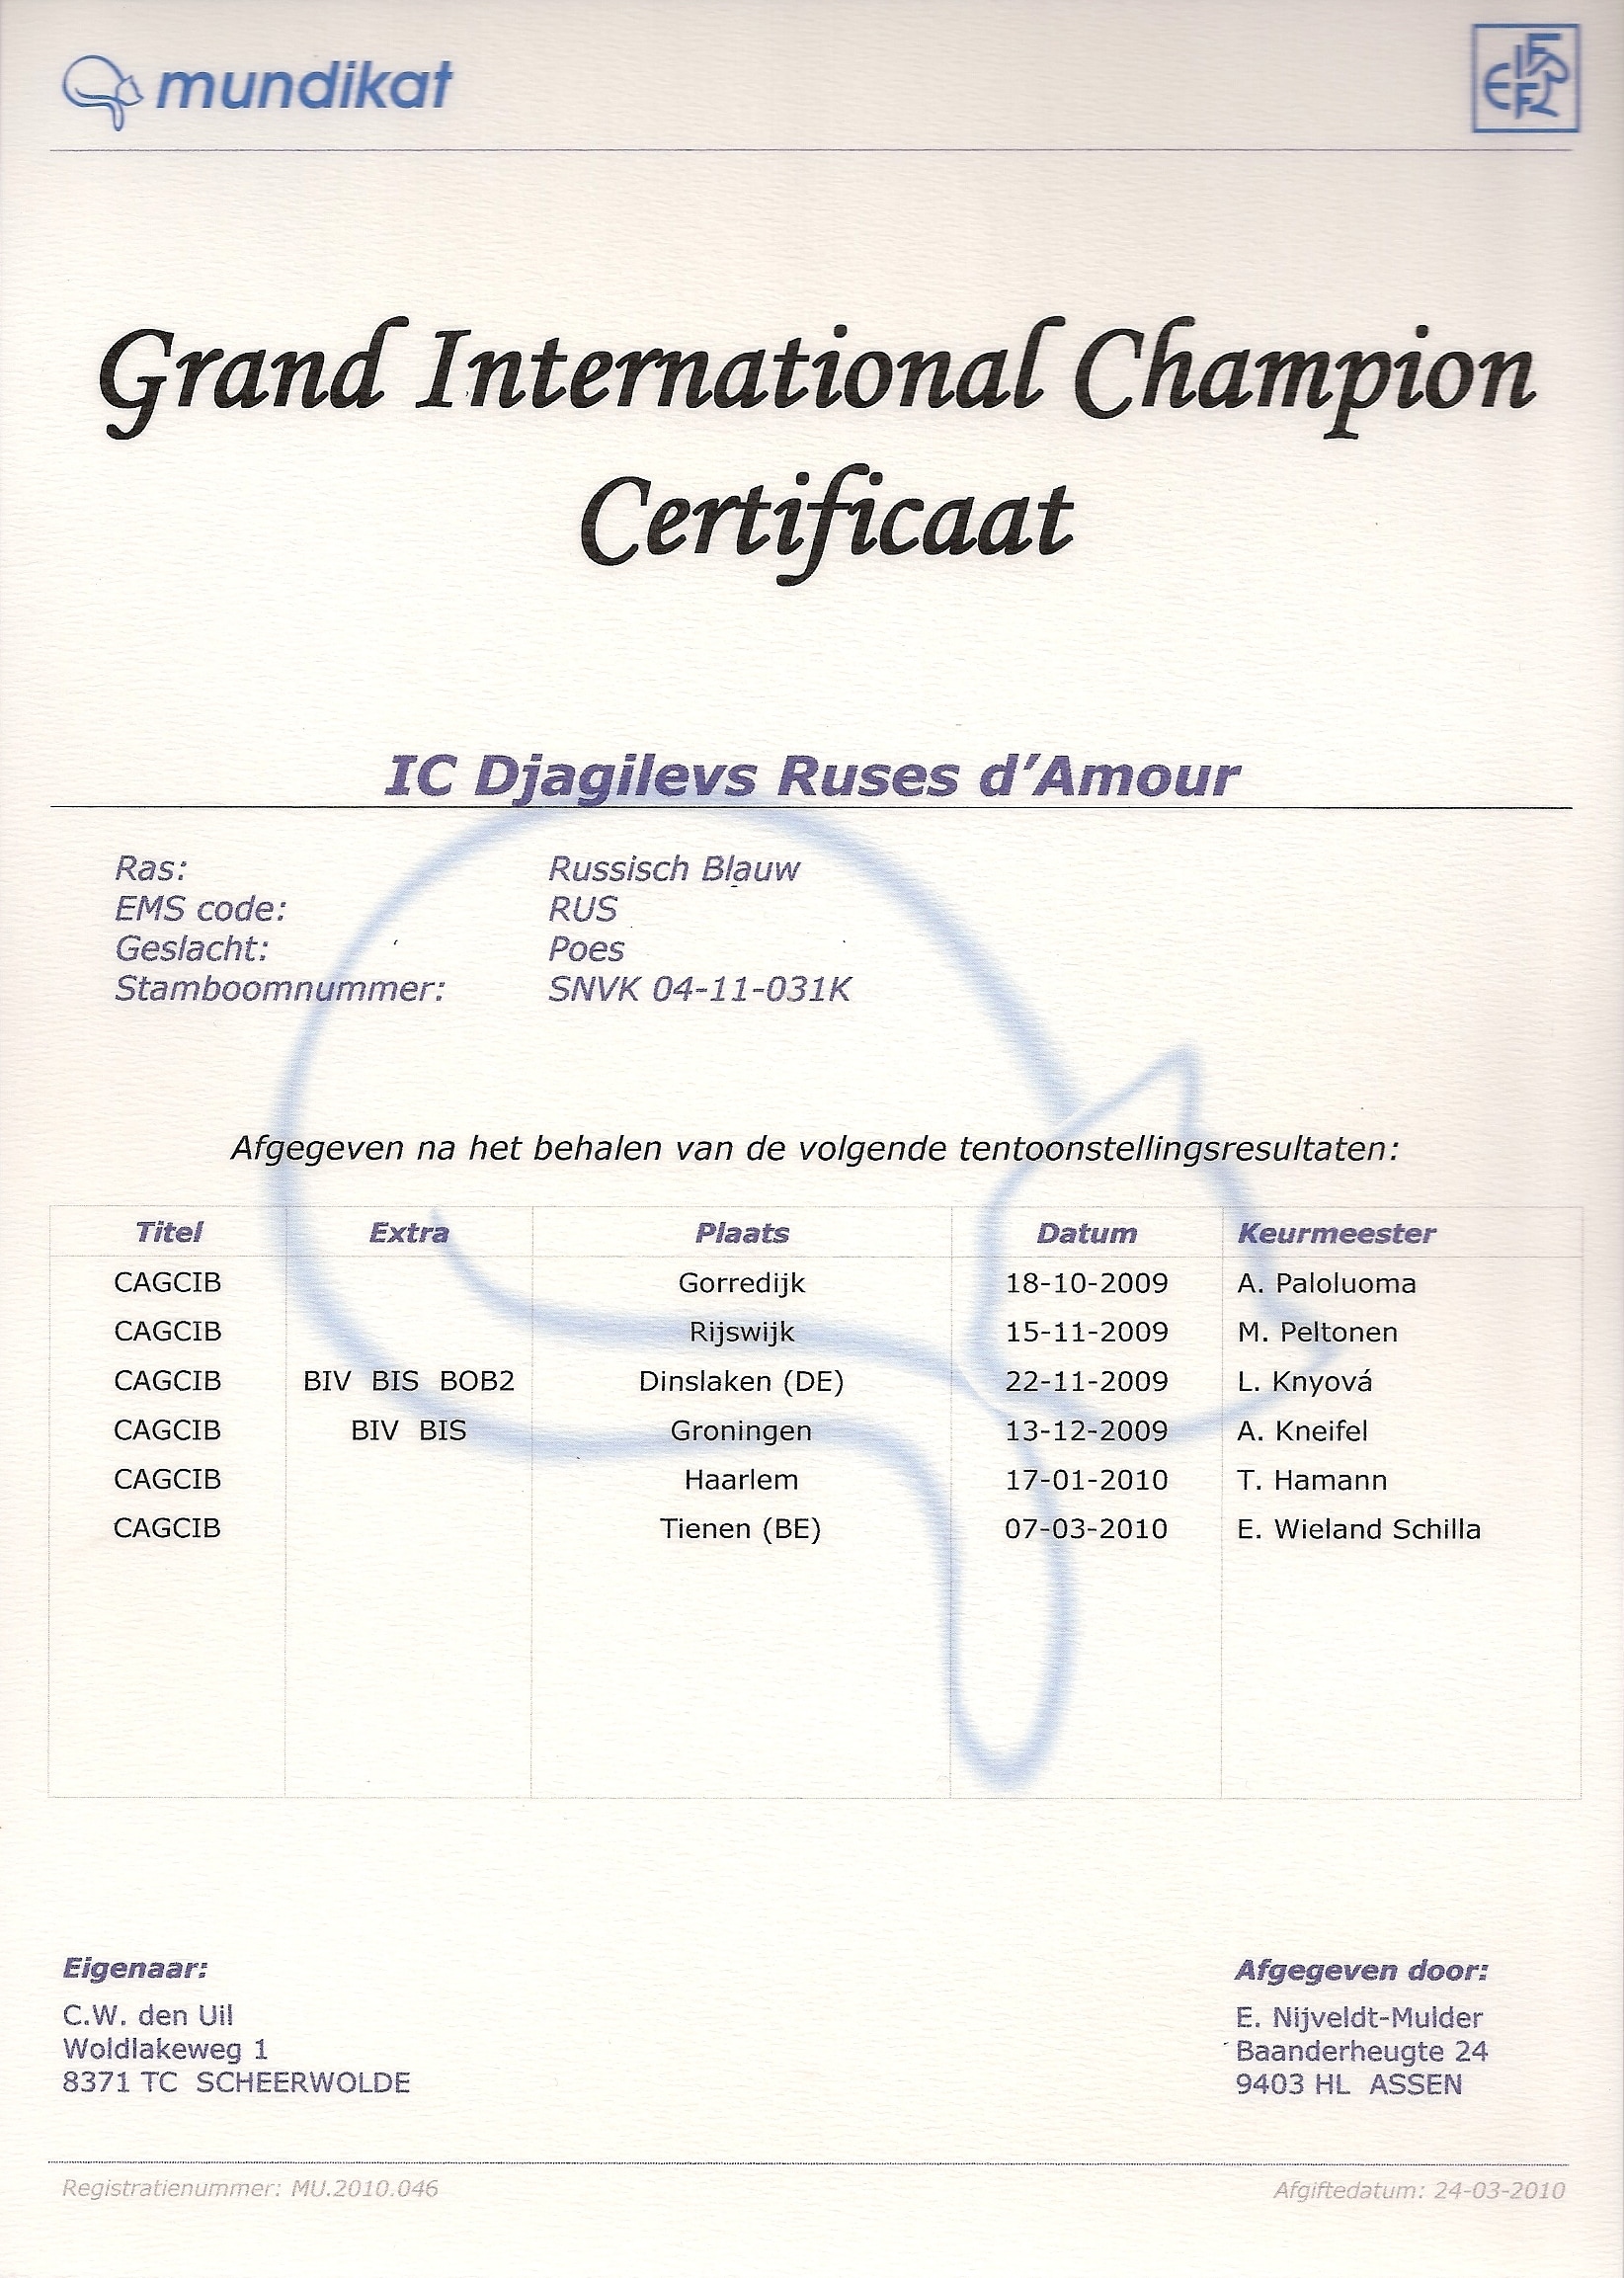 Grand International Champion certificaat Djagilevs Ruses d'Amour.jpg